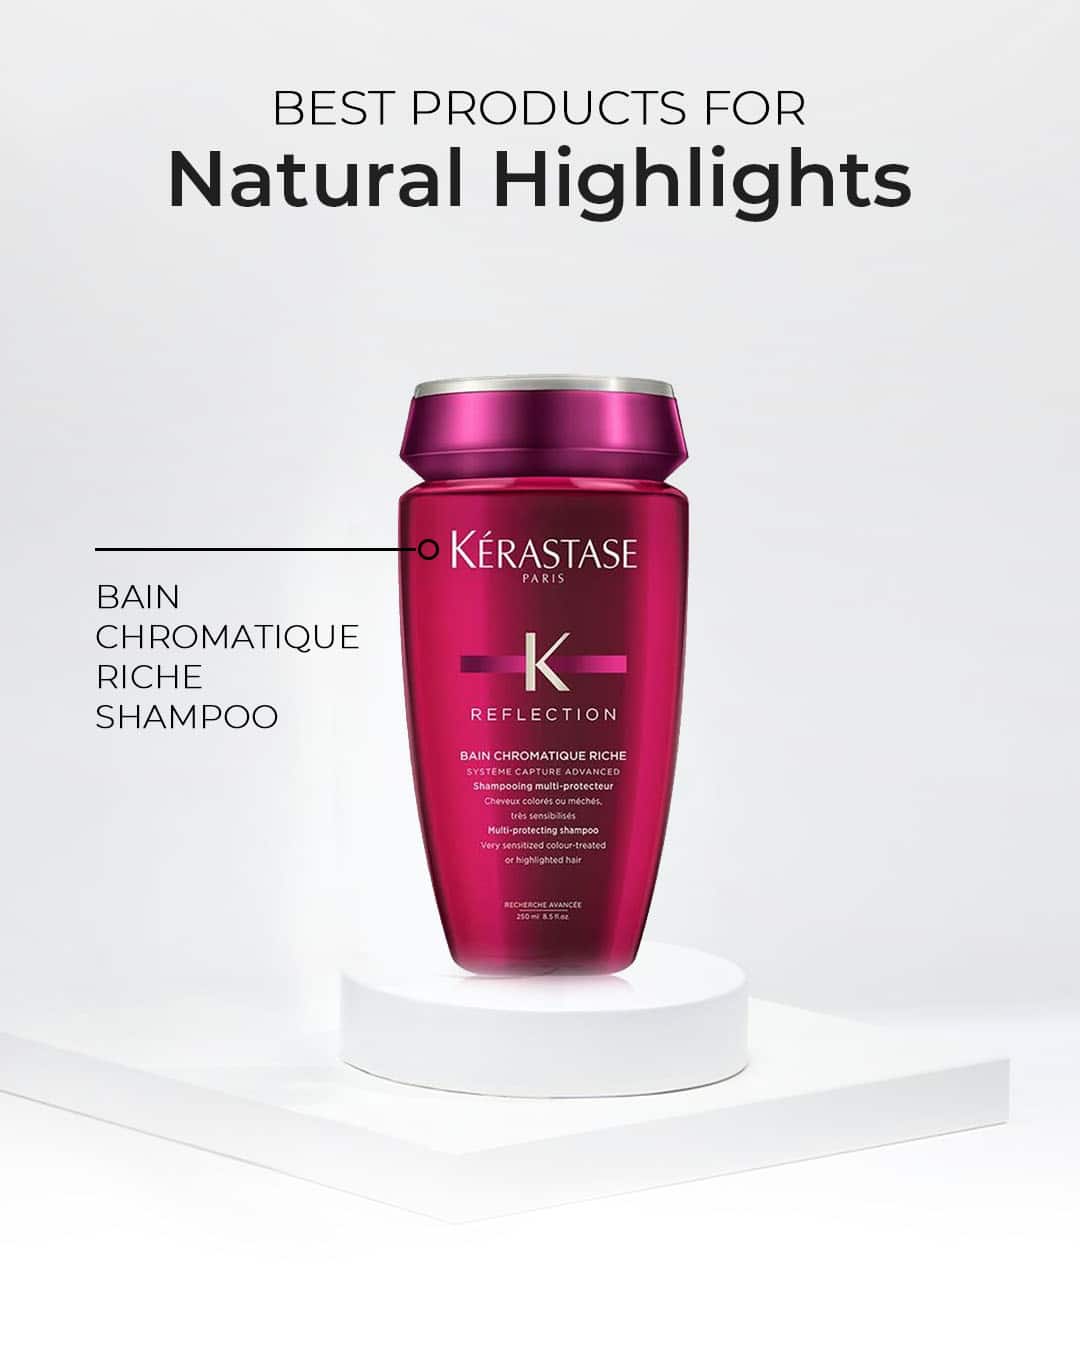 Kerastase's Reflection product for Natural highlights hair